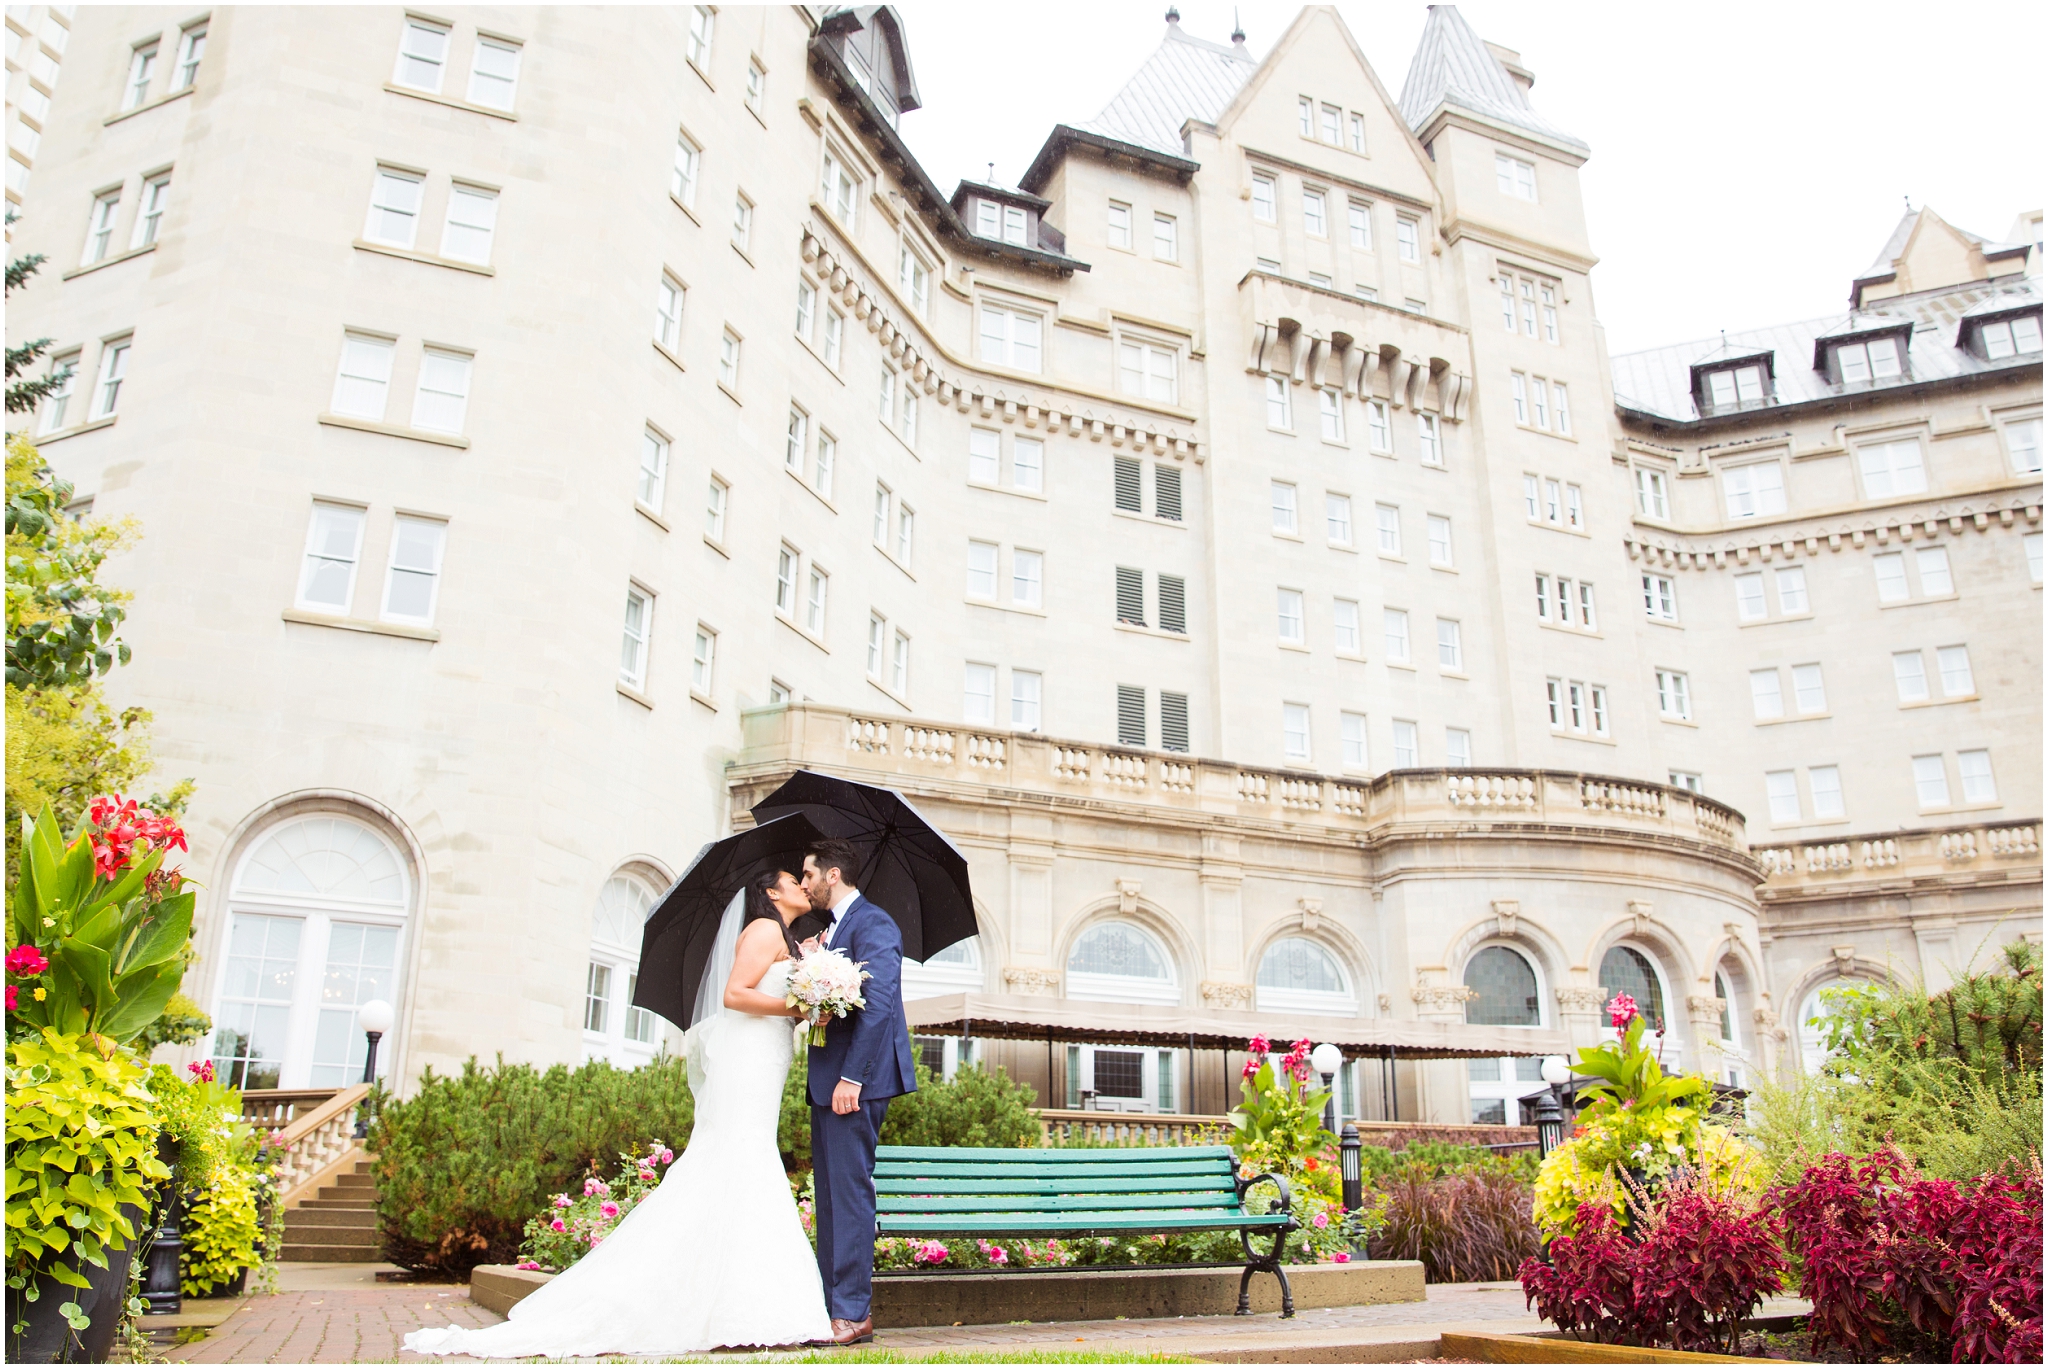 Hotel -Macdonald- Wedding- Photos-Umbrellas